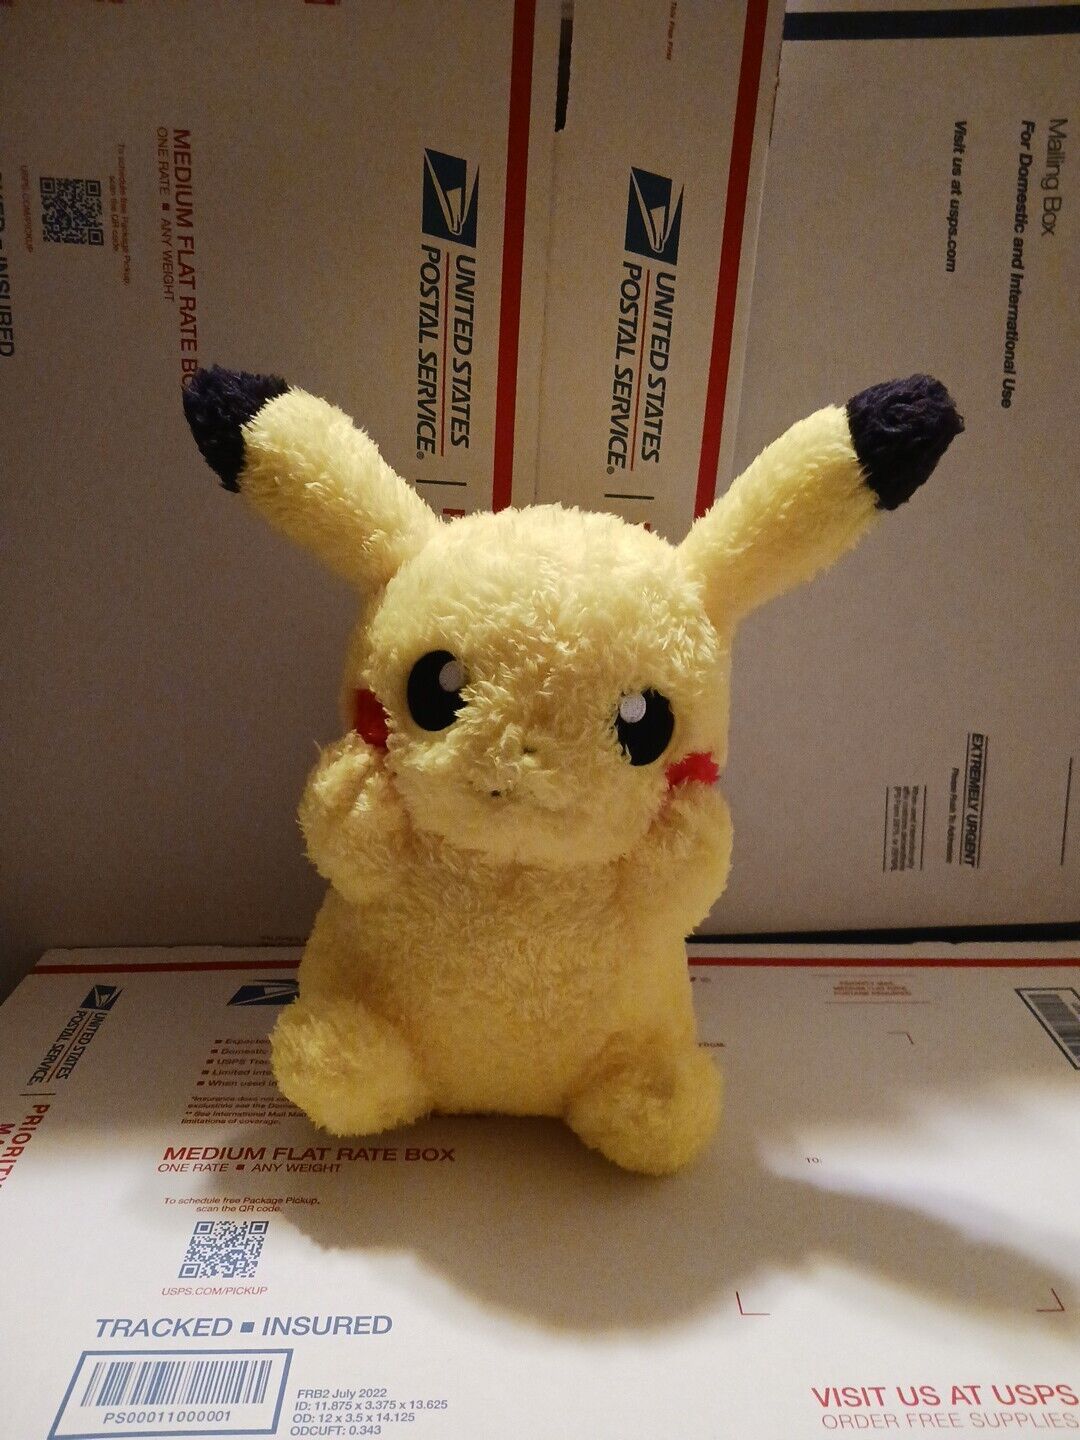 Bandai Pokemon Pikachu Plush Japan Imported New 12.5 Inch Tall X 11 Inch Wide